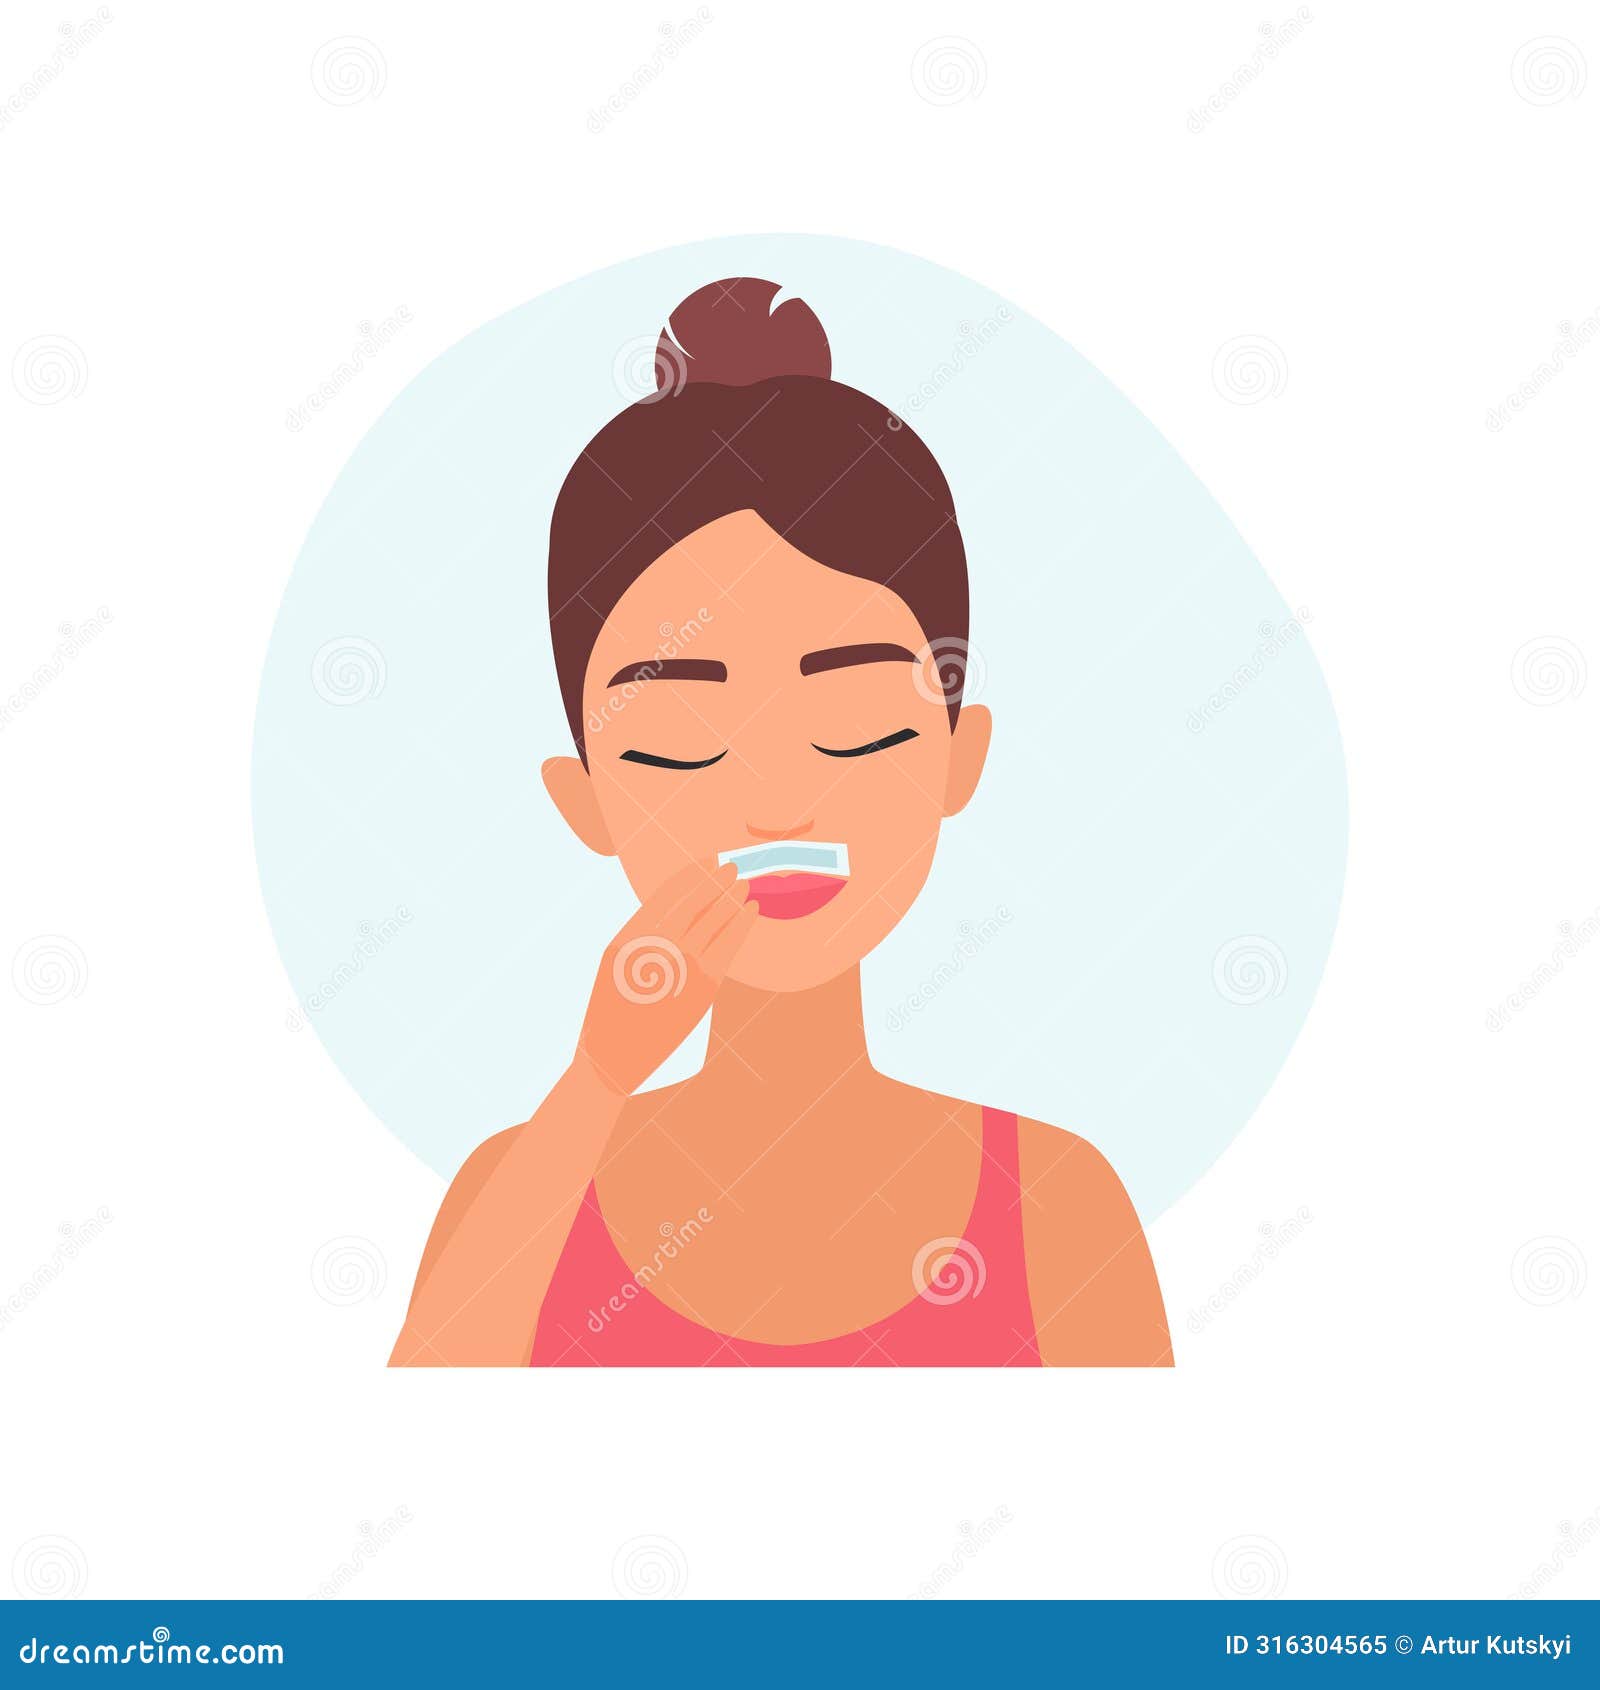 girl epilating lip area using wax strip, hygiene skincare procedure